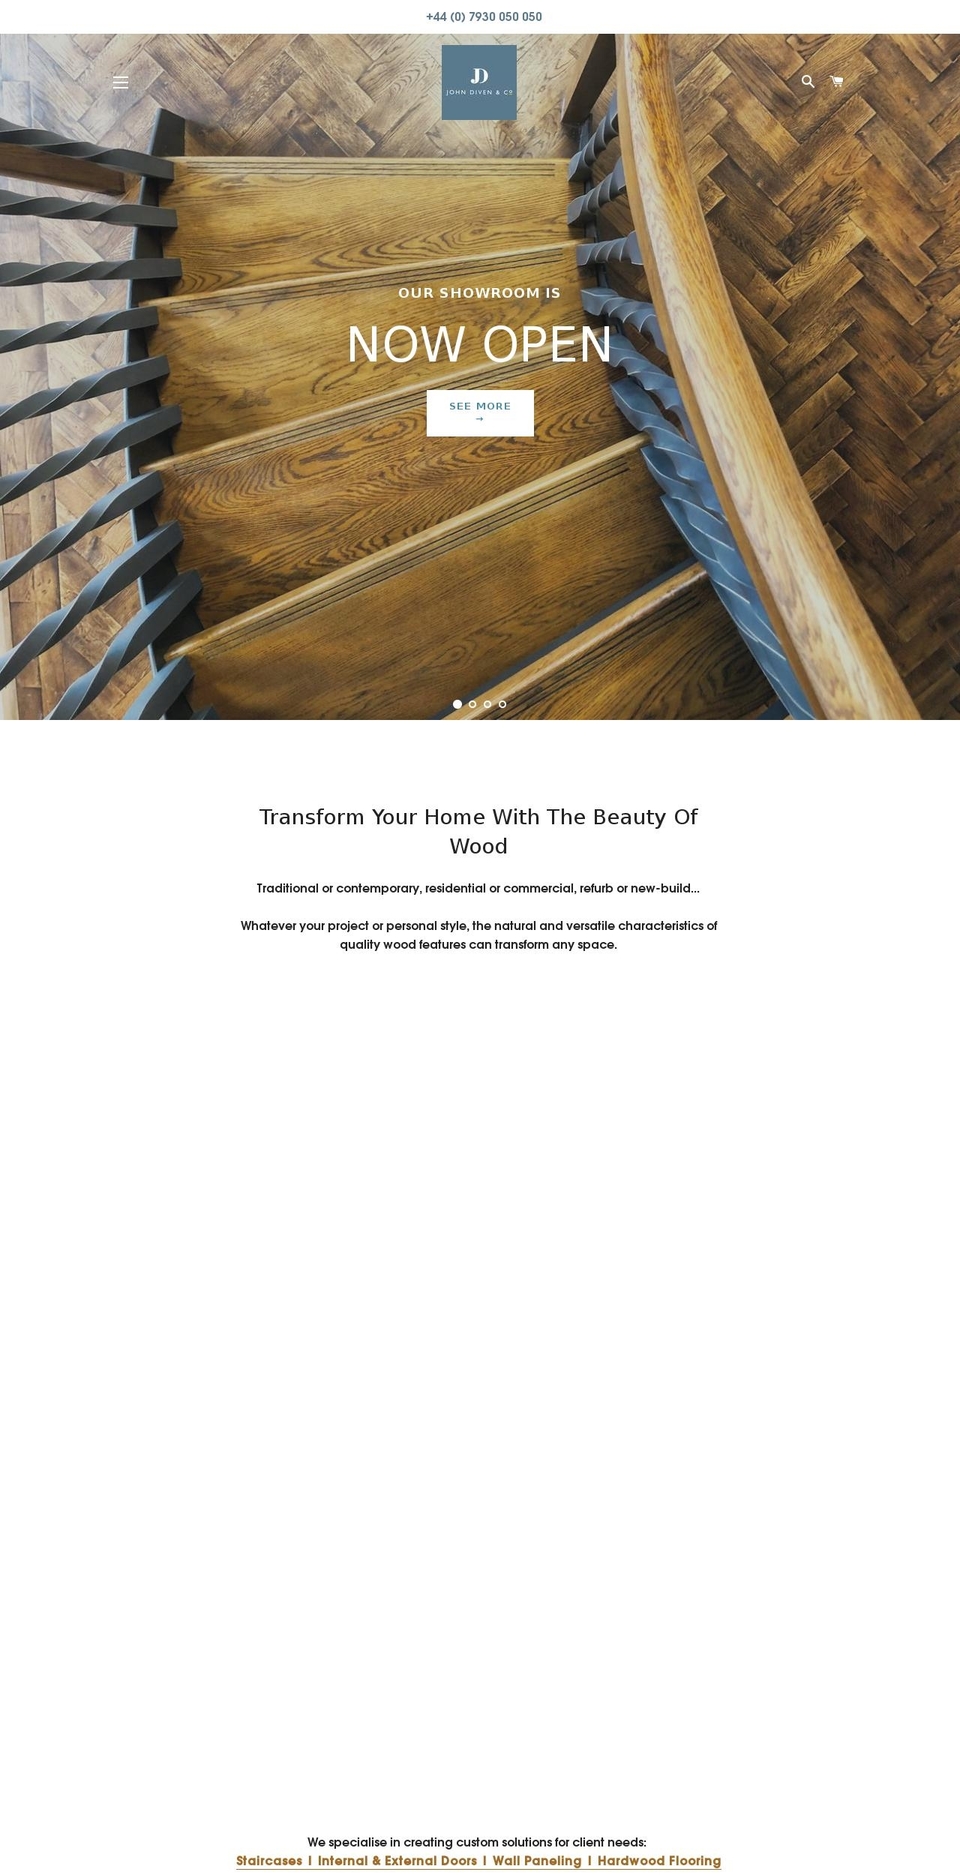 staircase-refurb.company shopify website screenshot